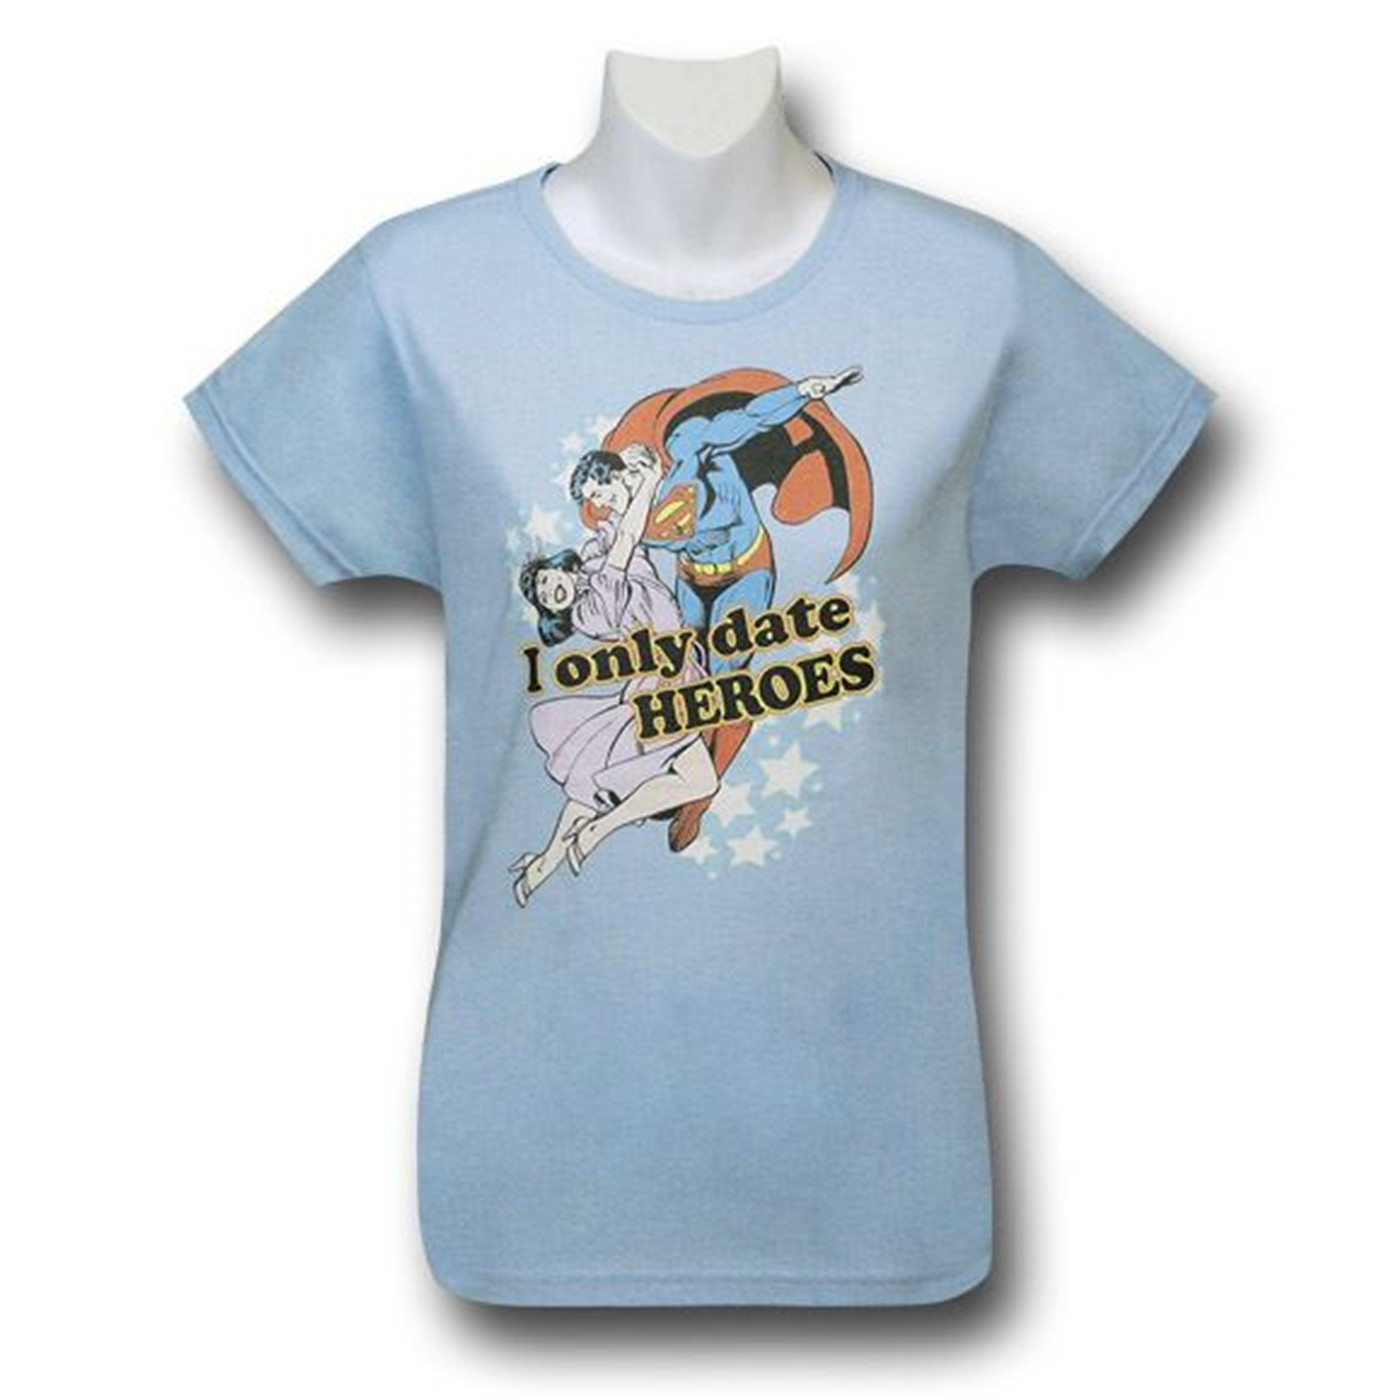 Superman Women's Lois Dates Heroes T-Shirt